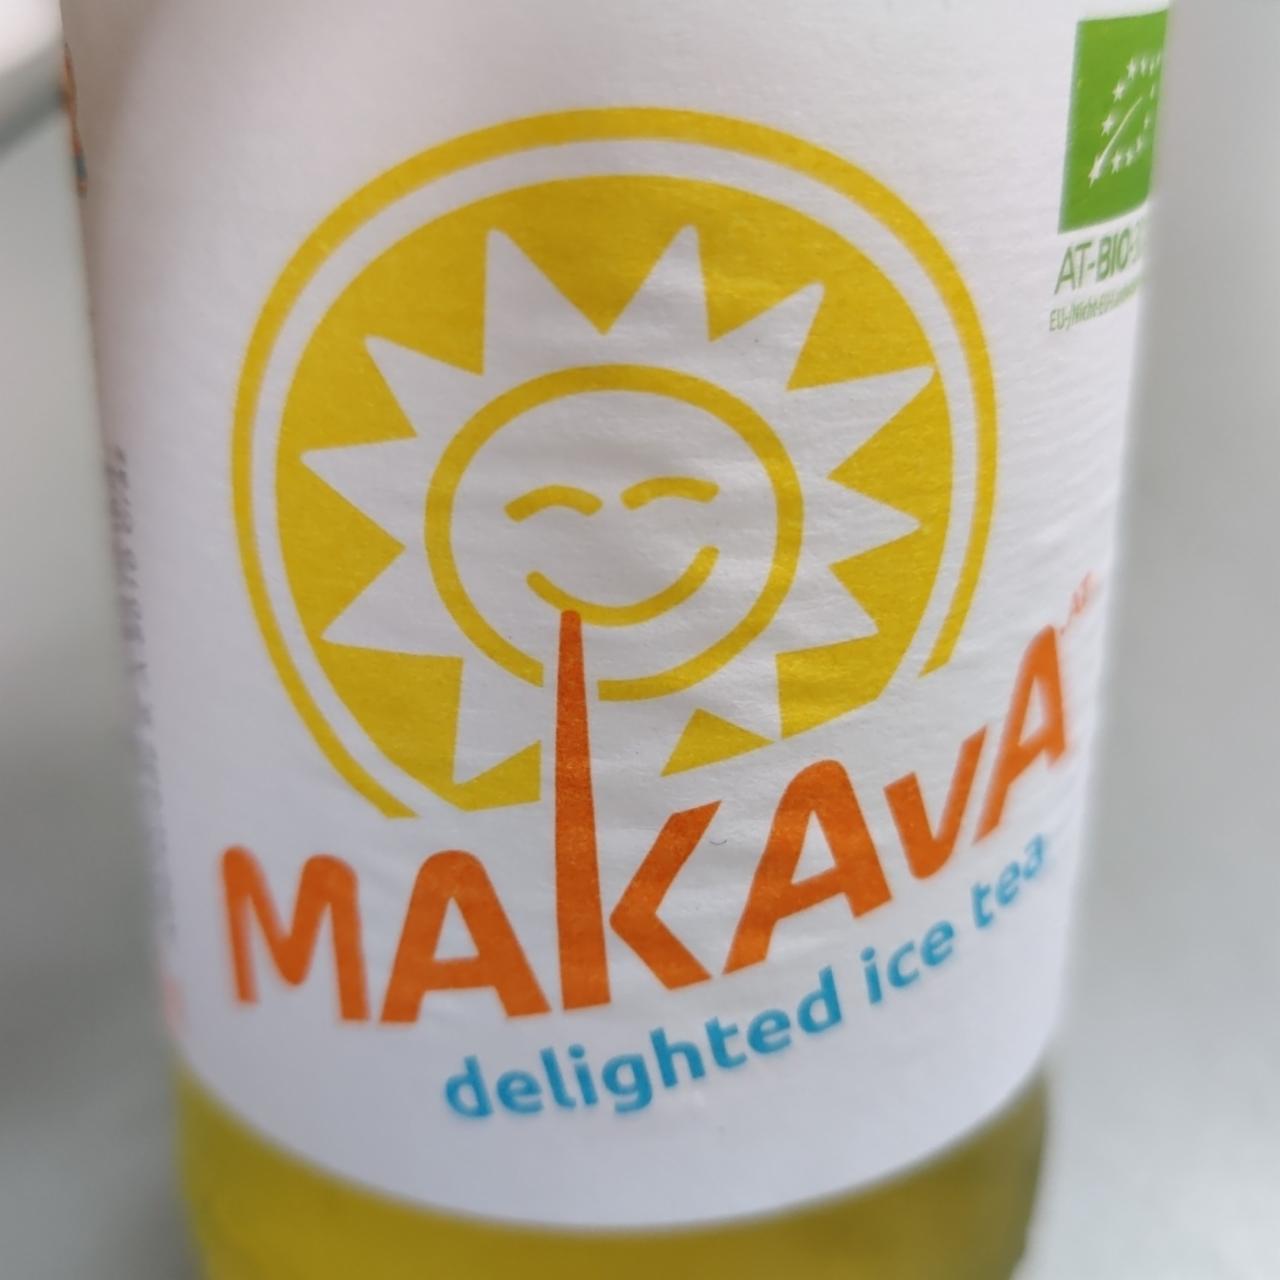 Fotografie - Makava delighted ice tea